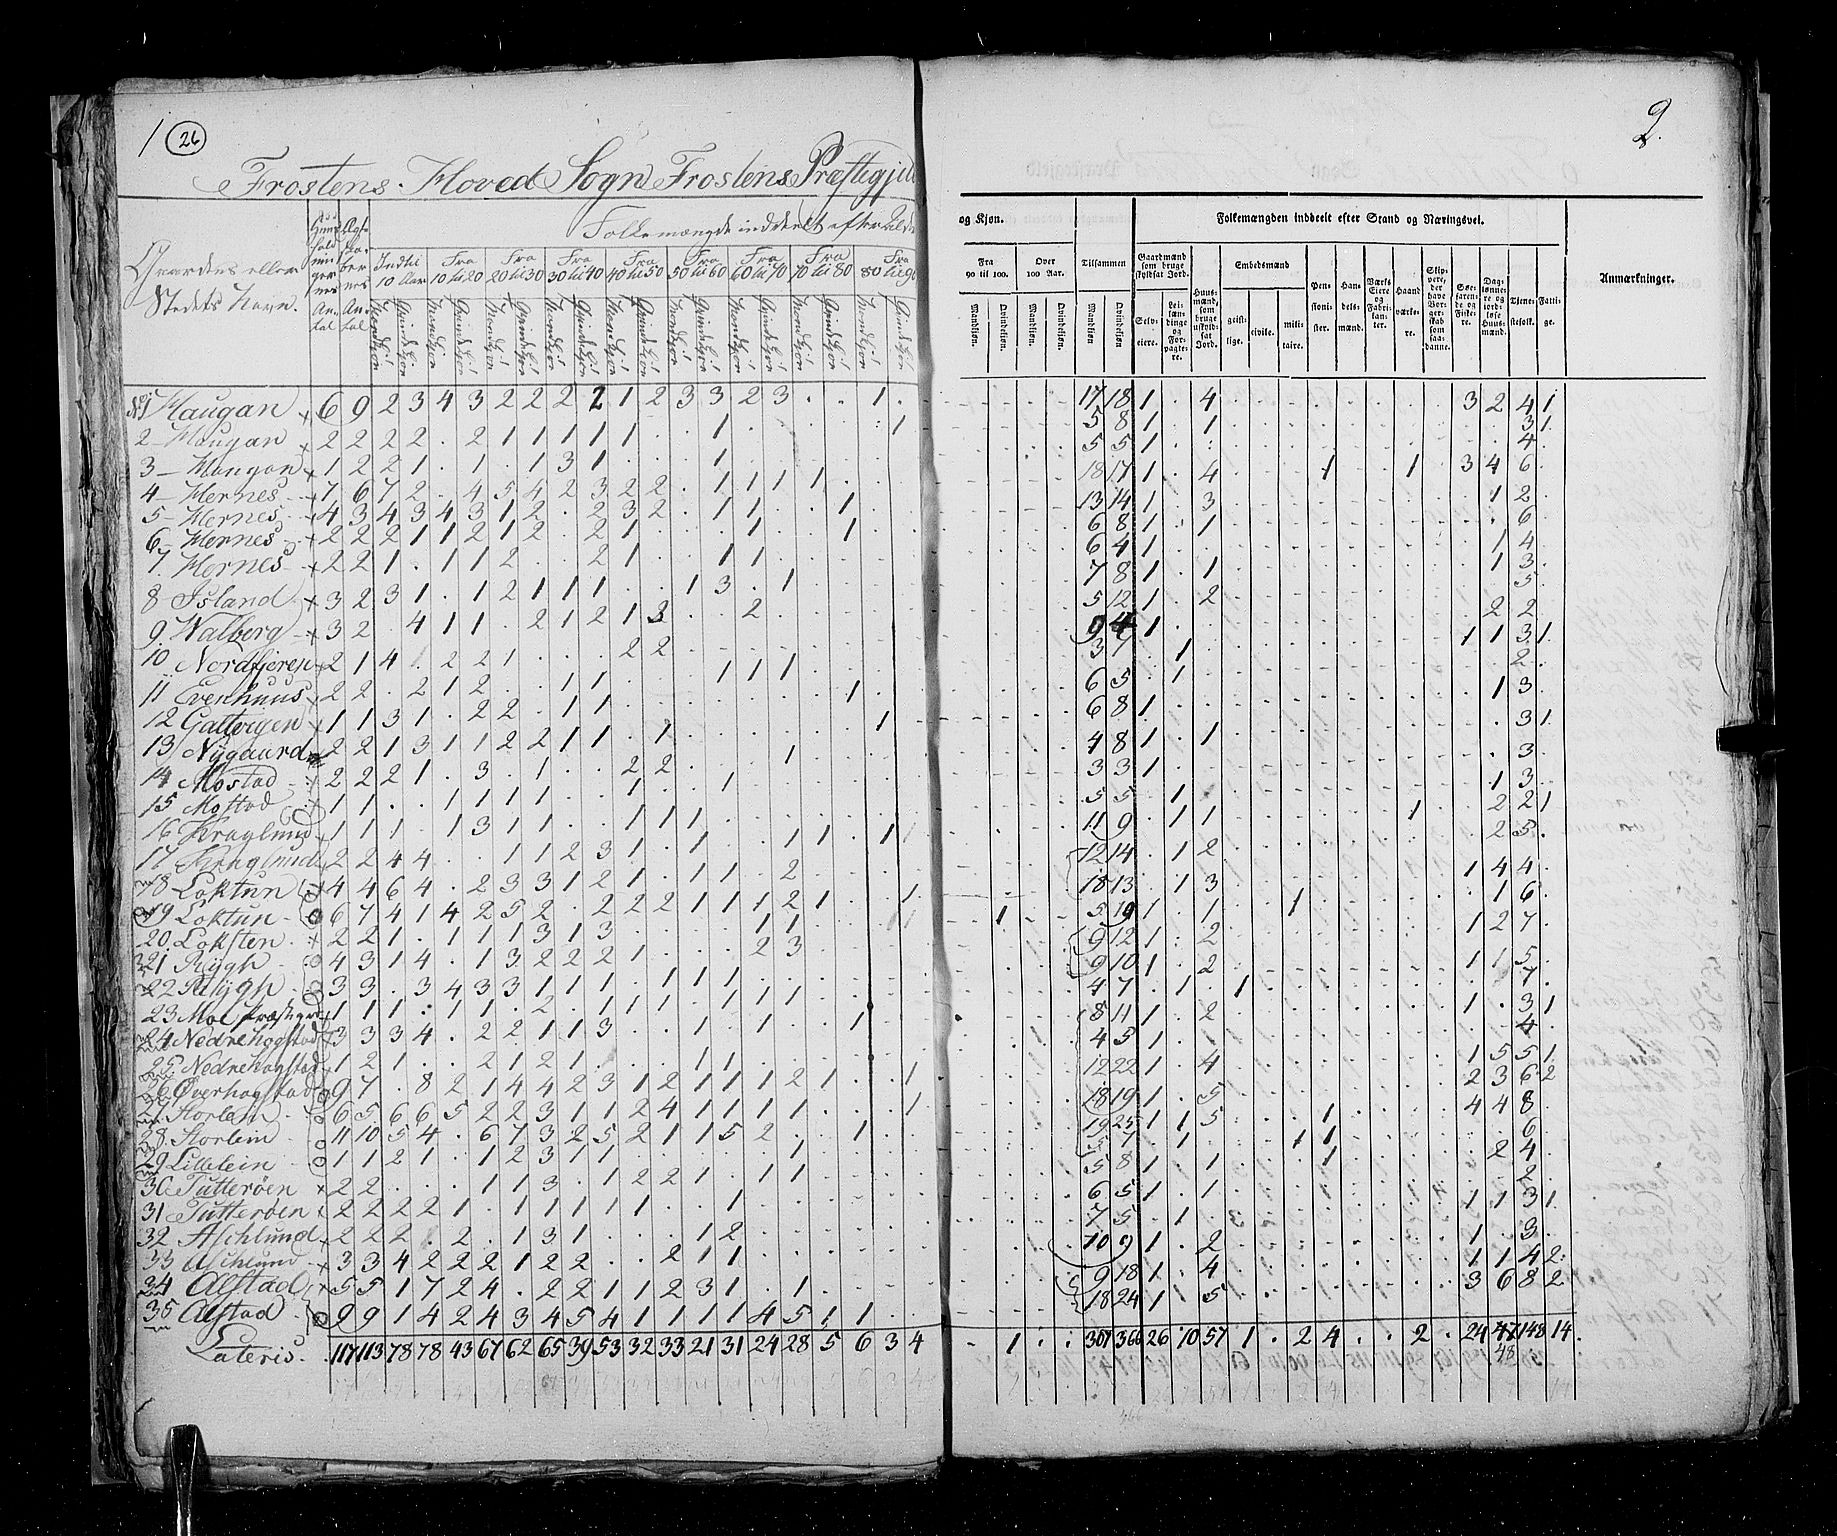 RA, Census 1825, vol. 17: Nordre Trondhjem amt, 1825, p. 26